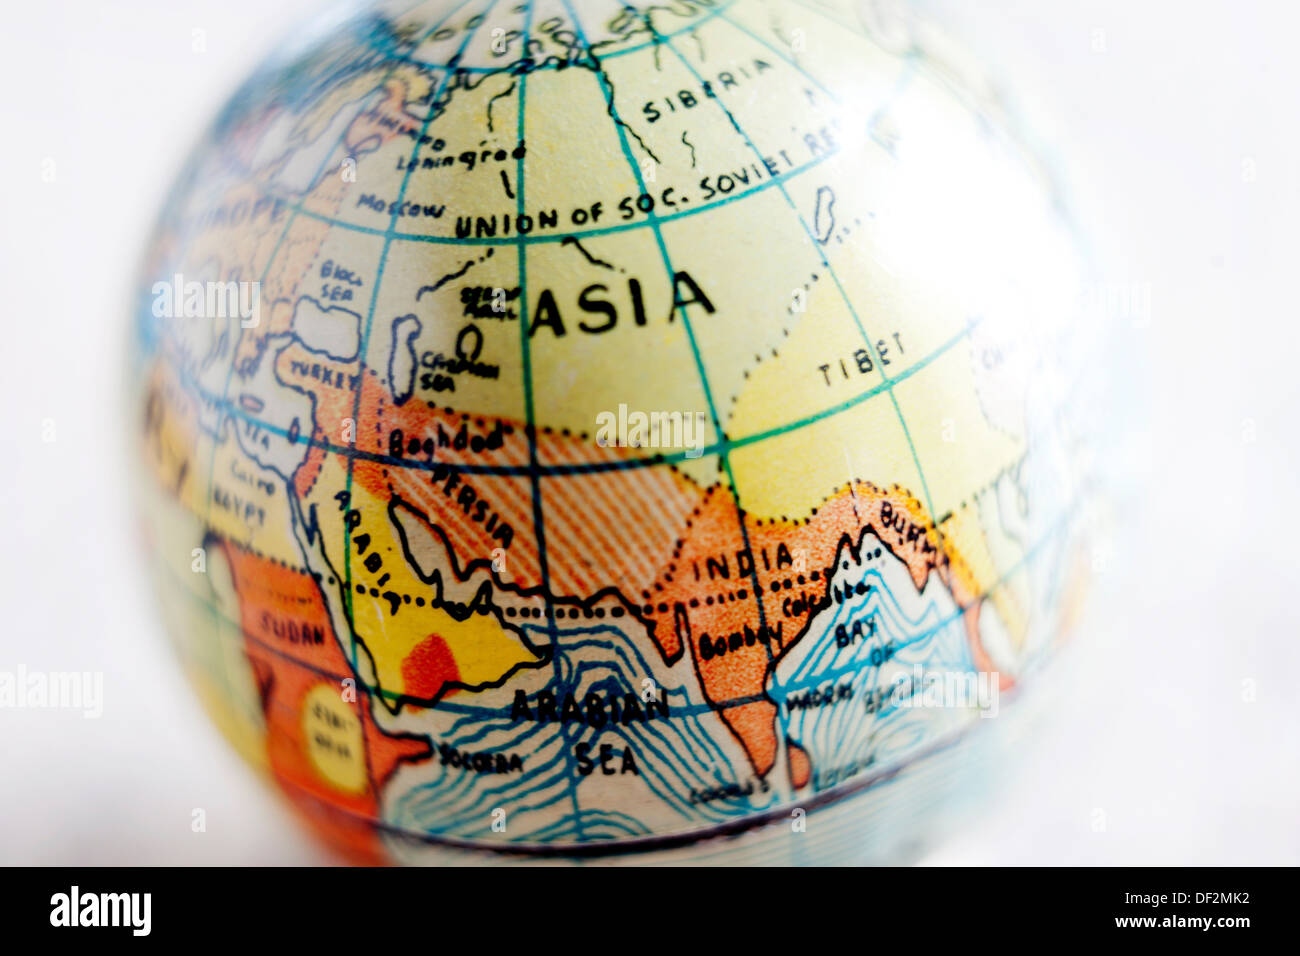 Bola del mundo, globo terraqueo, cinco continentes,Siberia, Union Sovietica, Asia, Leningrado, moscu, turquia, arabia, sudan, Stock Photo